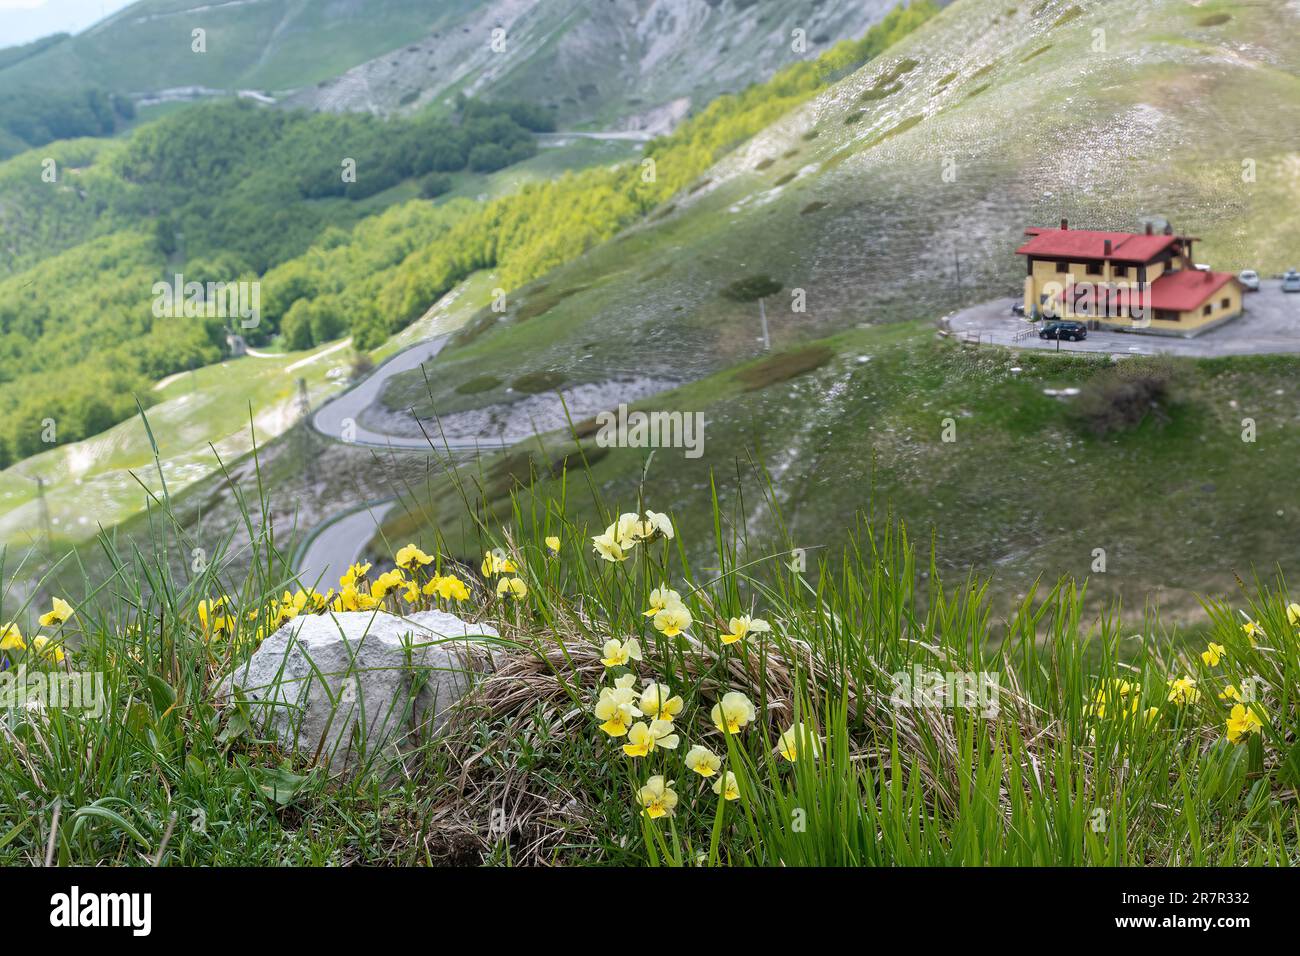 Angelo Sebastiani refuge (Rifugio CAI Angelo Sebastiani), un refuge de style alpin dans les Abruzzes Apennines sur le Mont Terminillo, Latium, Italie, Europe Banque D'Images